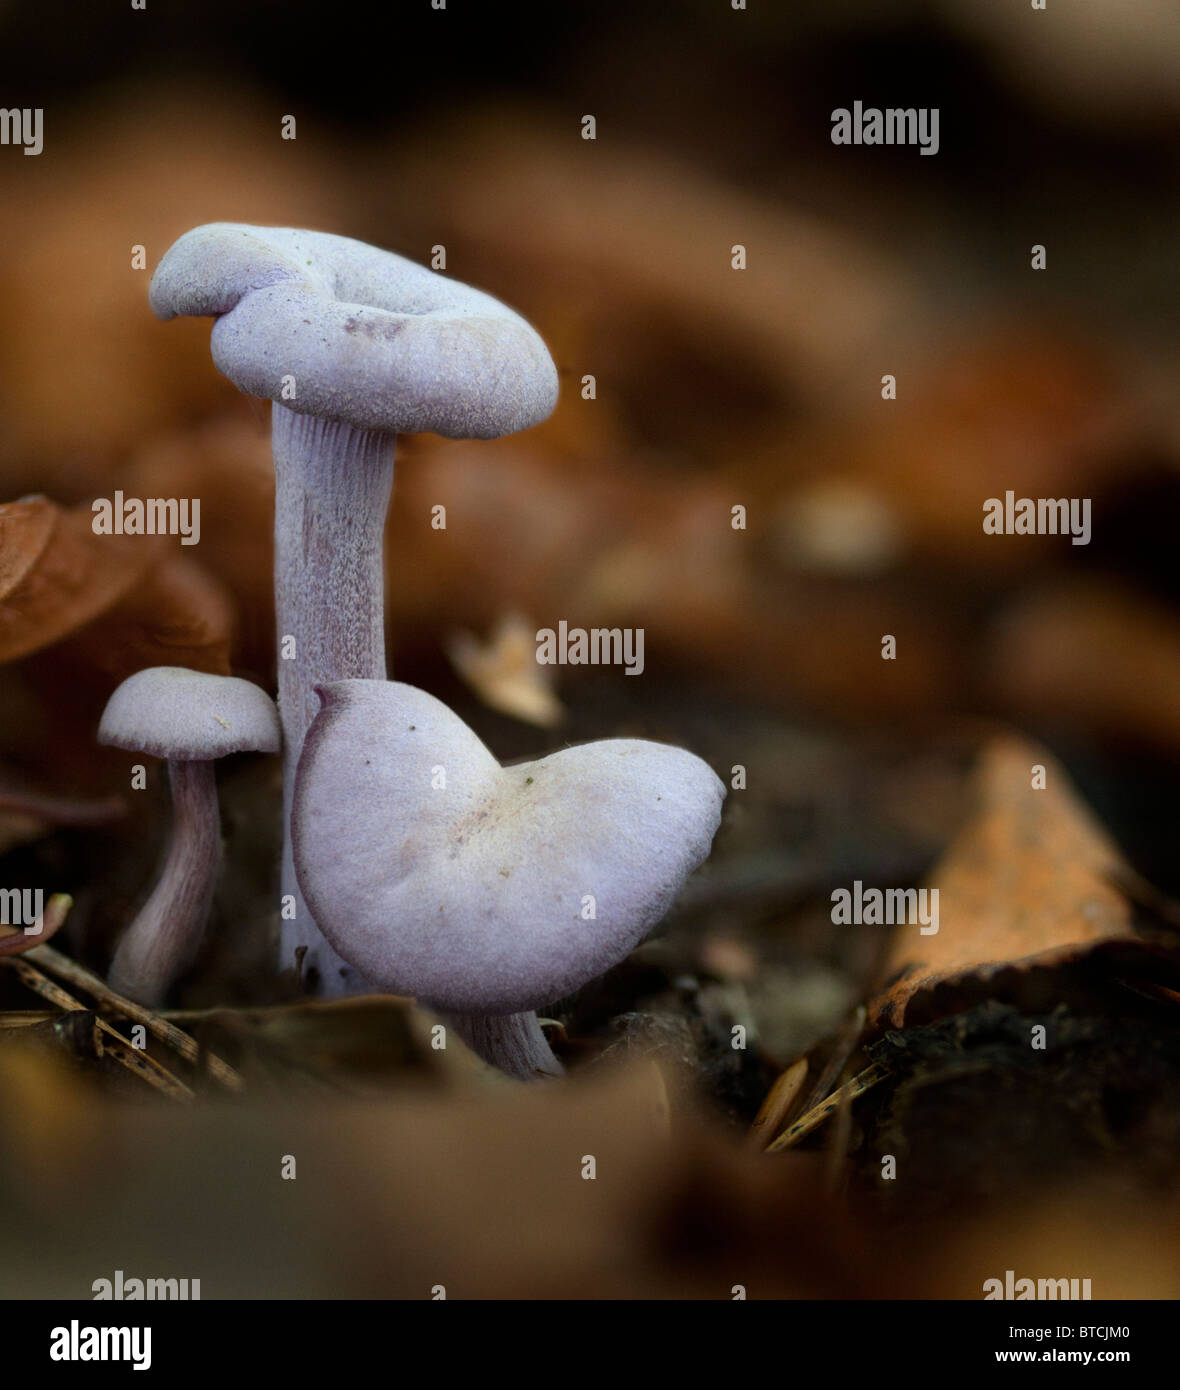 Amethyst Deceiver mushroom (Laccaria amethystea), an edible mushroom that mainly grows in beech leaf litter. Stock Photo